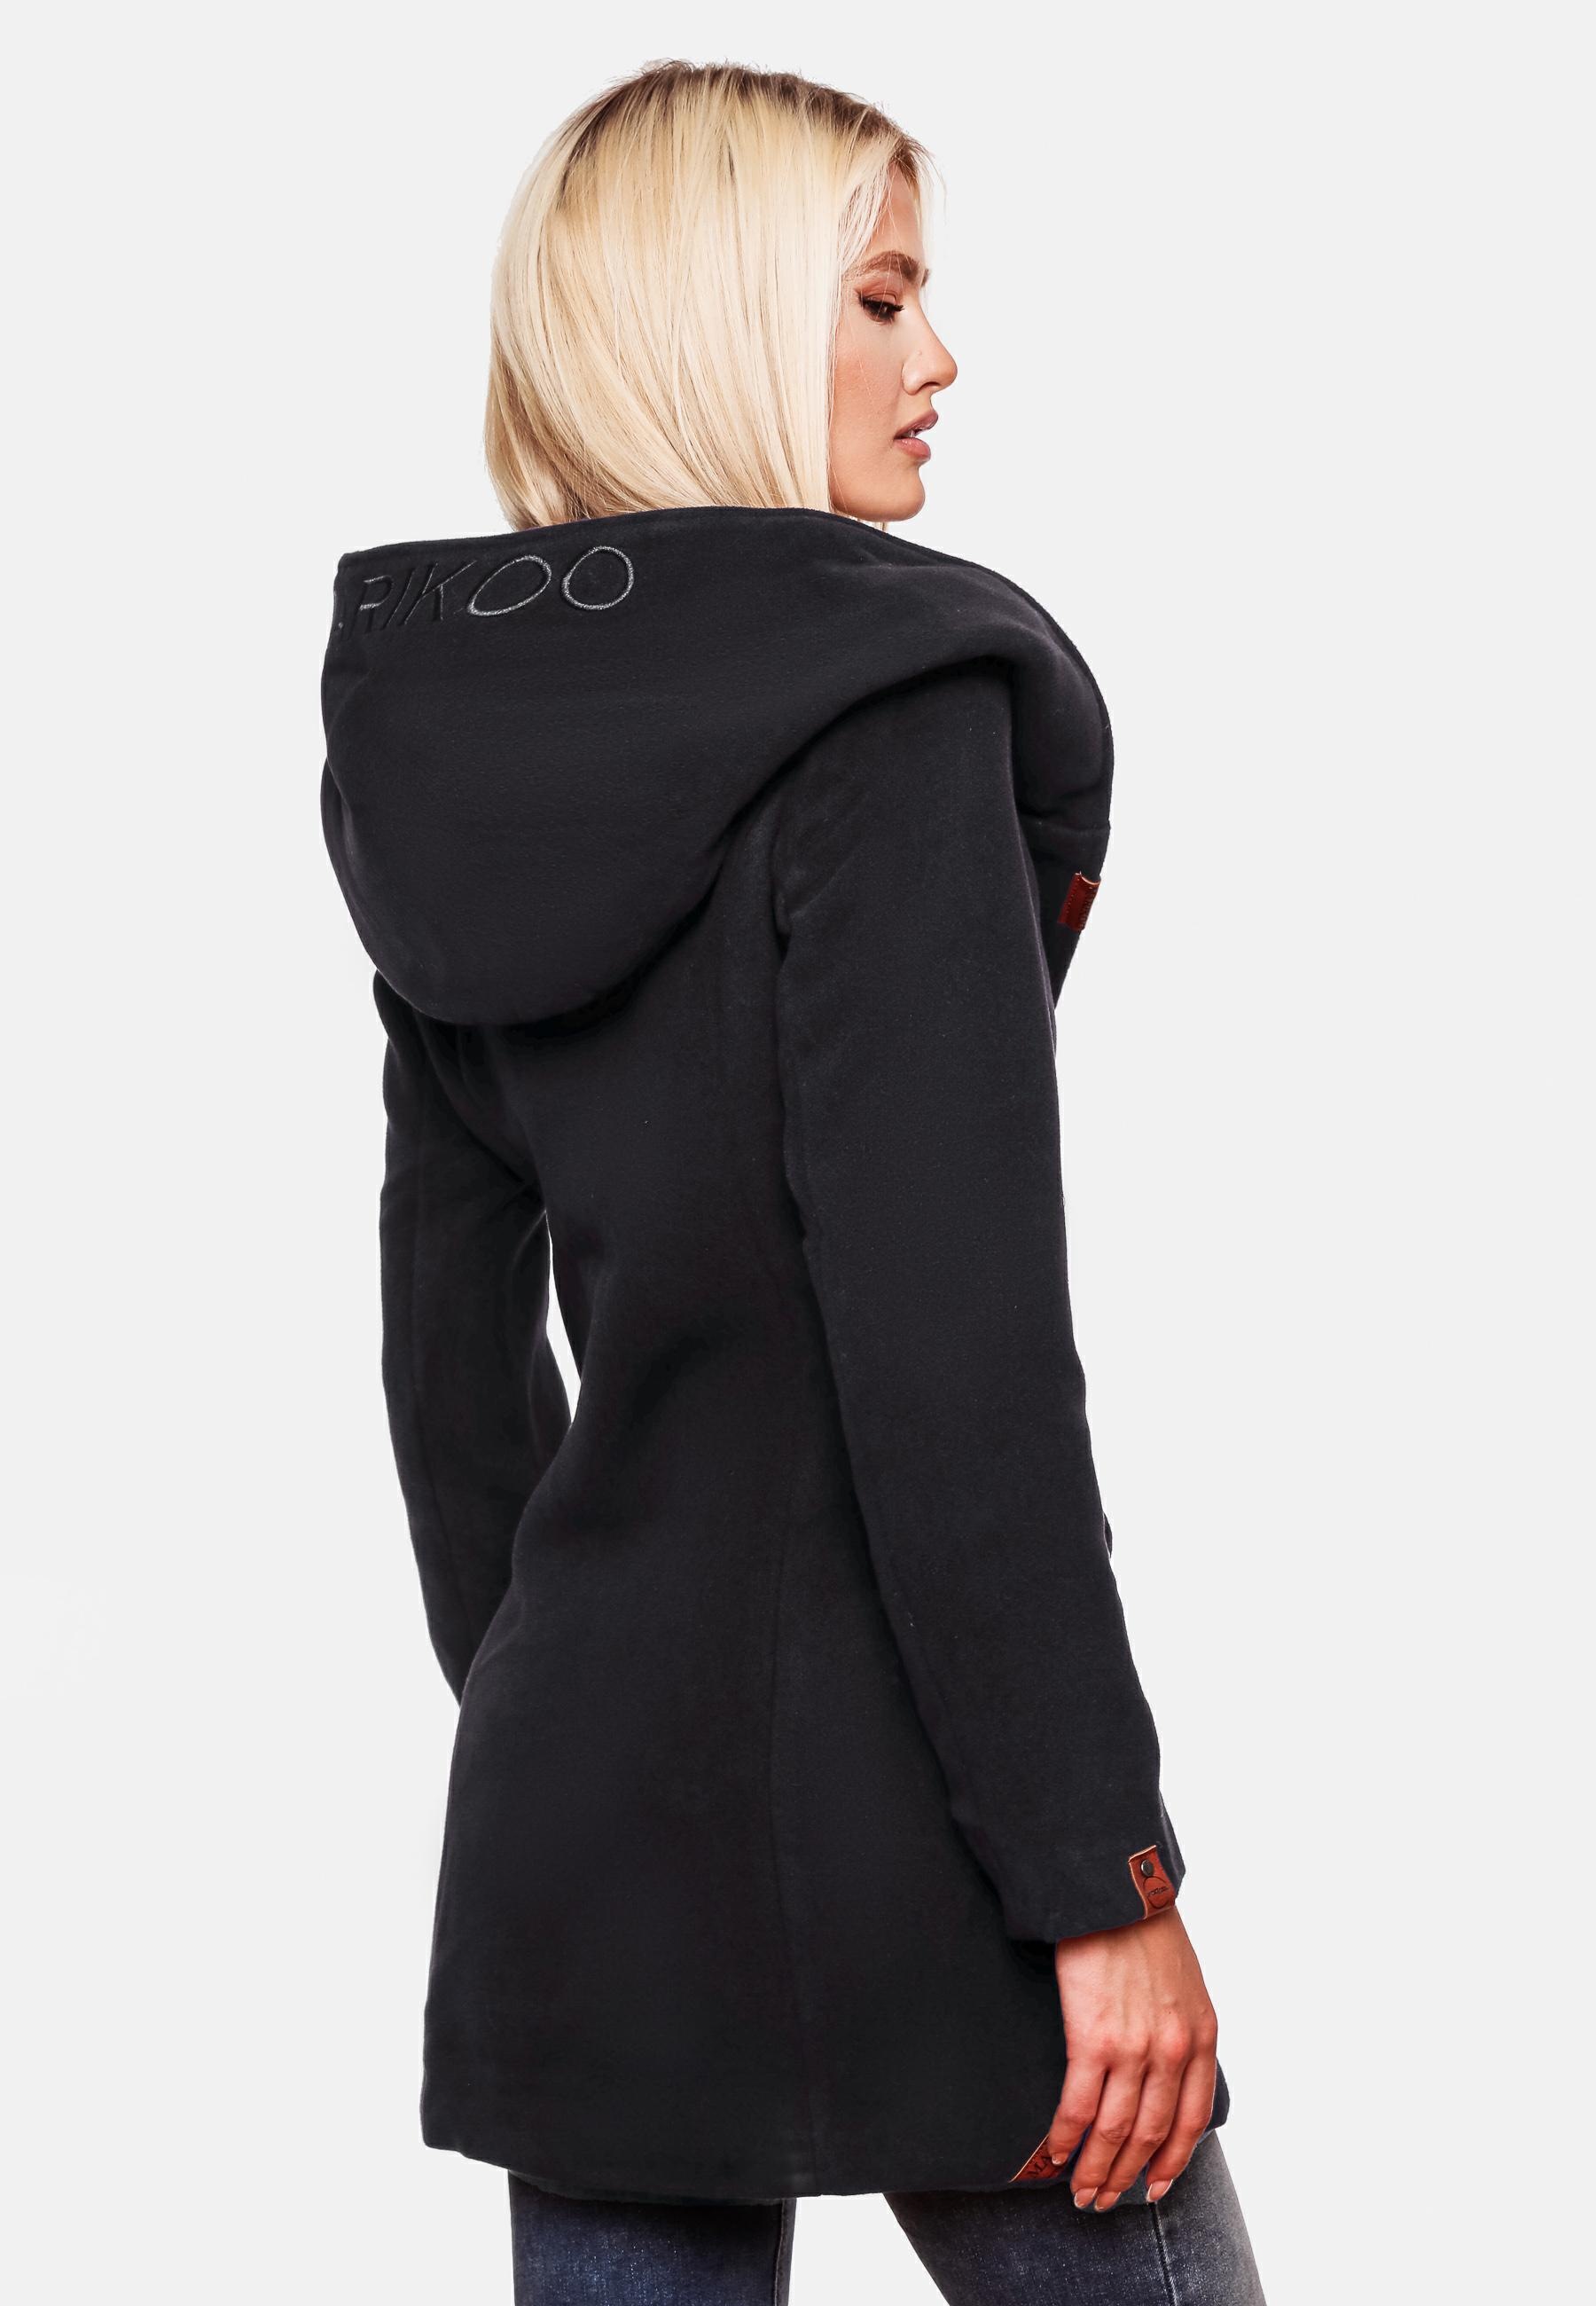 Marikoo Wintermantel »Maikoo«, hochwertiger Mantel mit großer Kapuze  bestellen | I'm walking